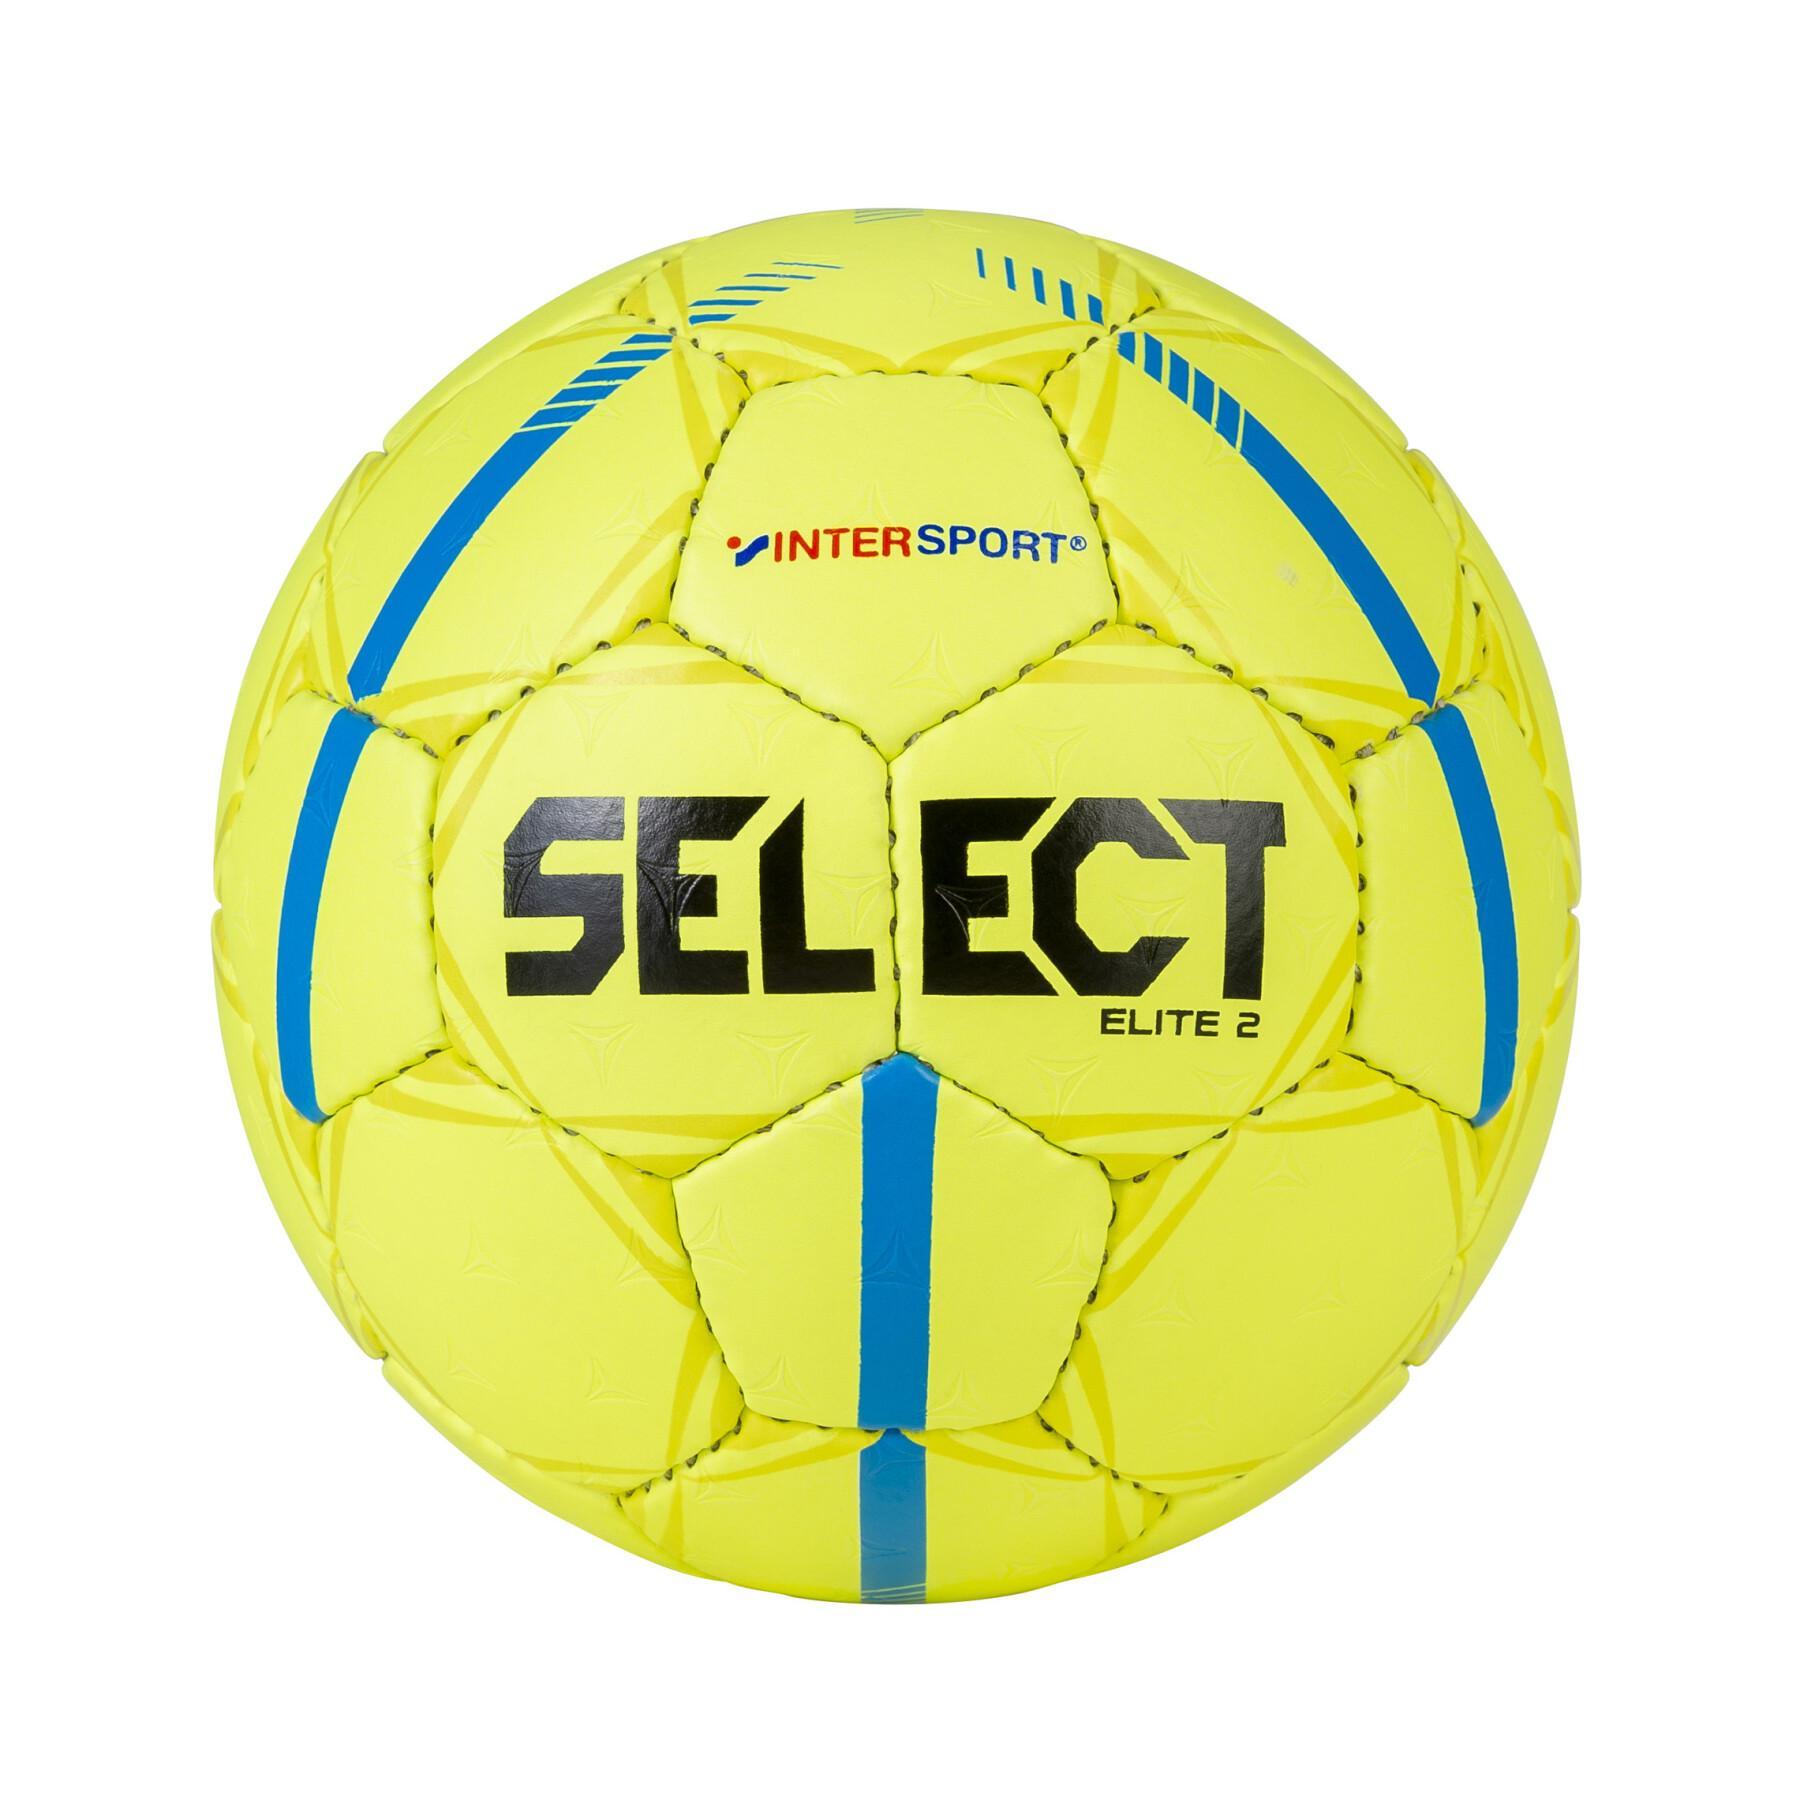 Balon Select Elite 2 Intersport